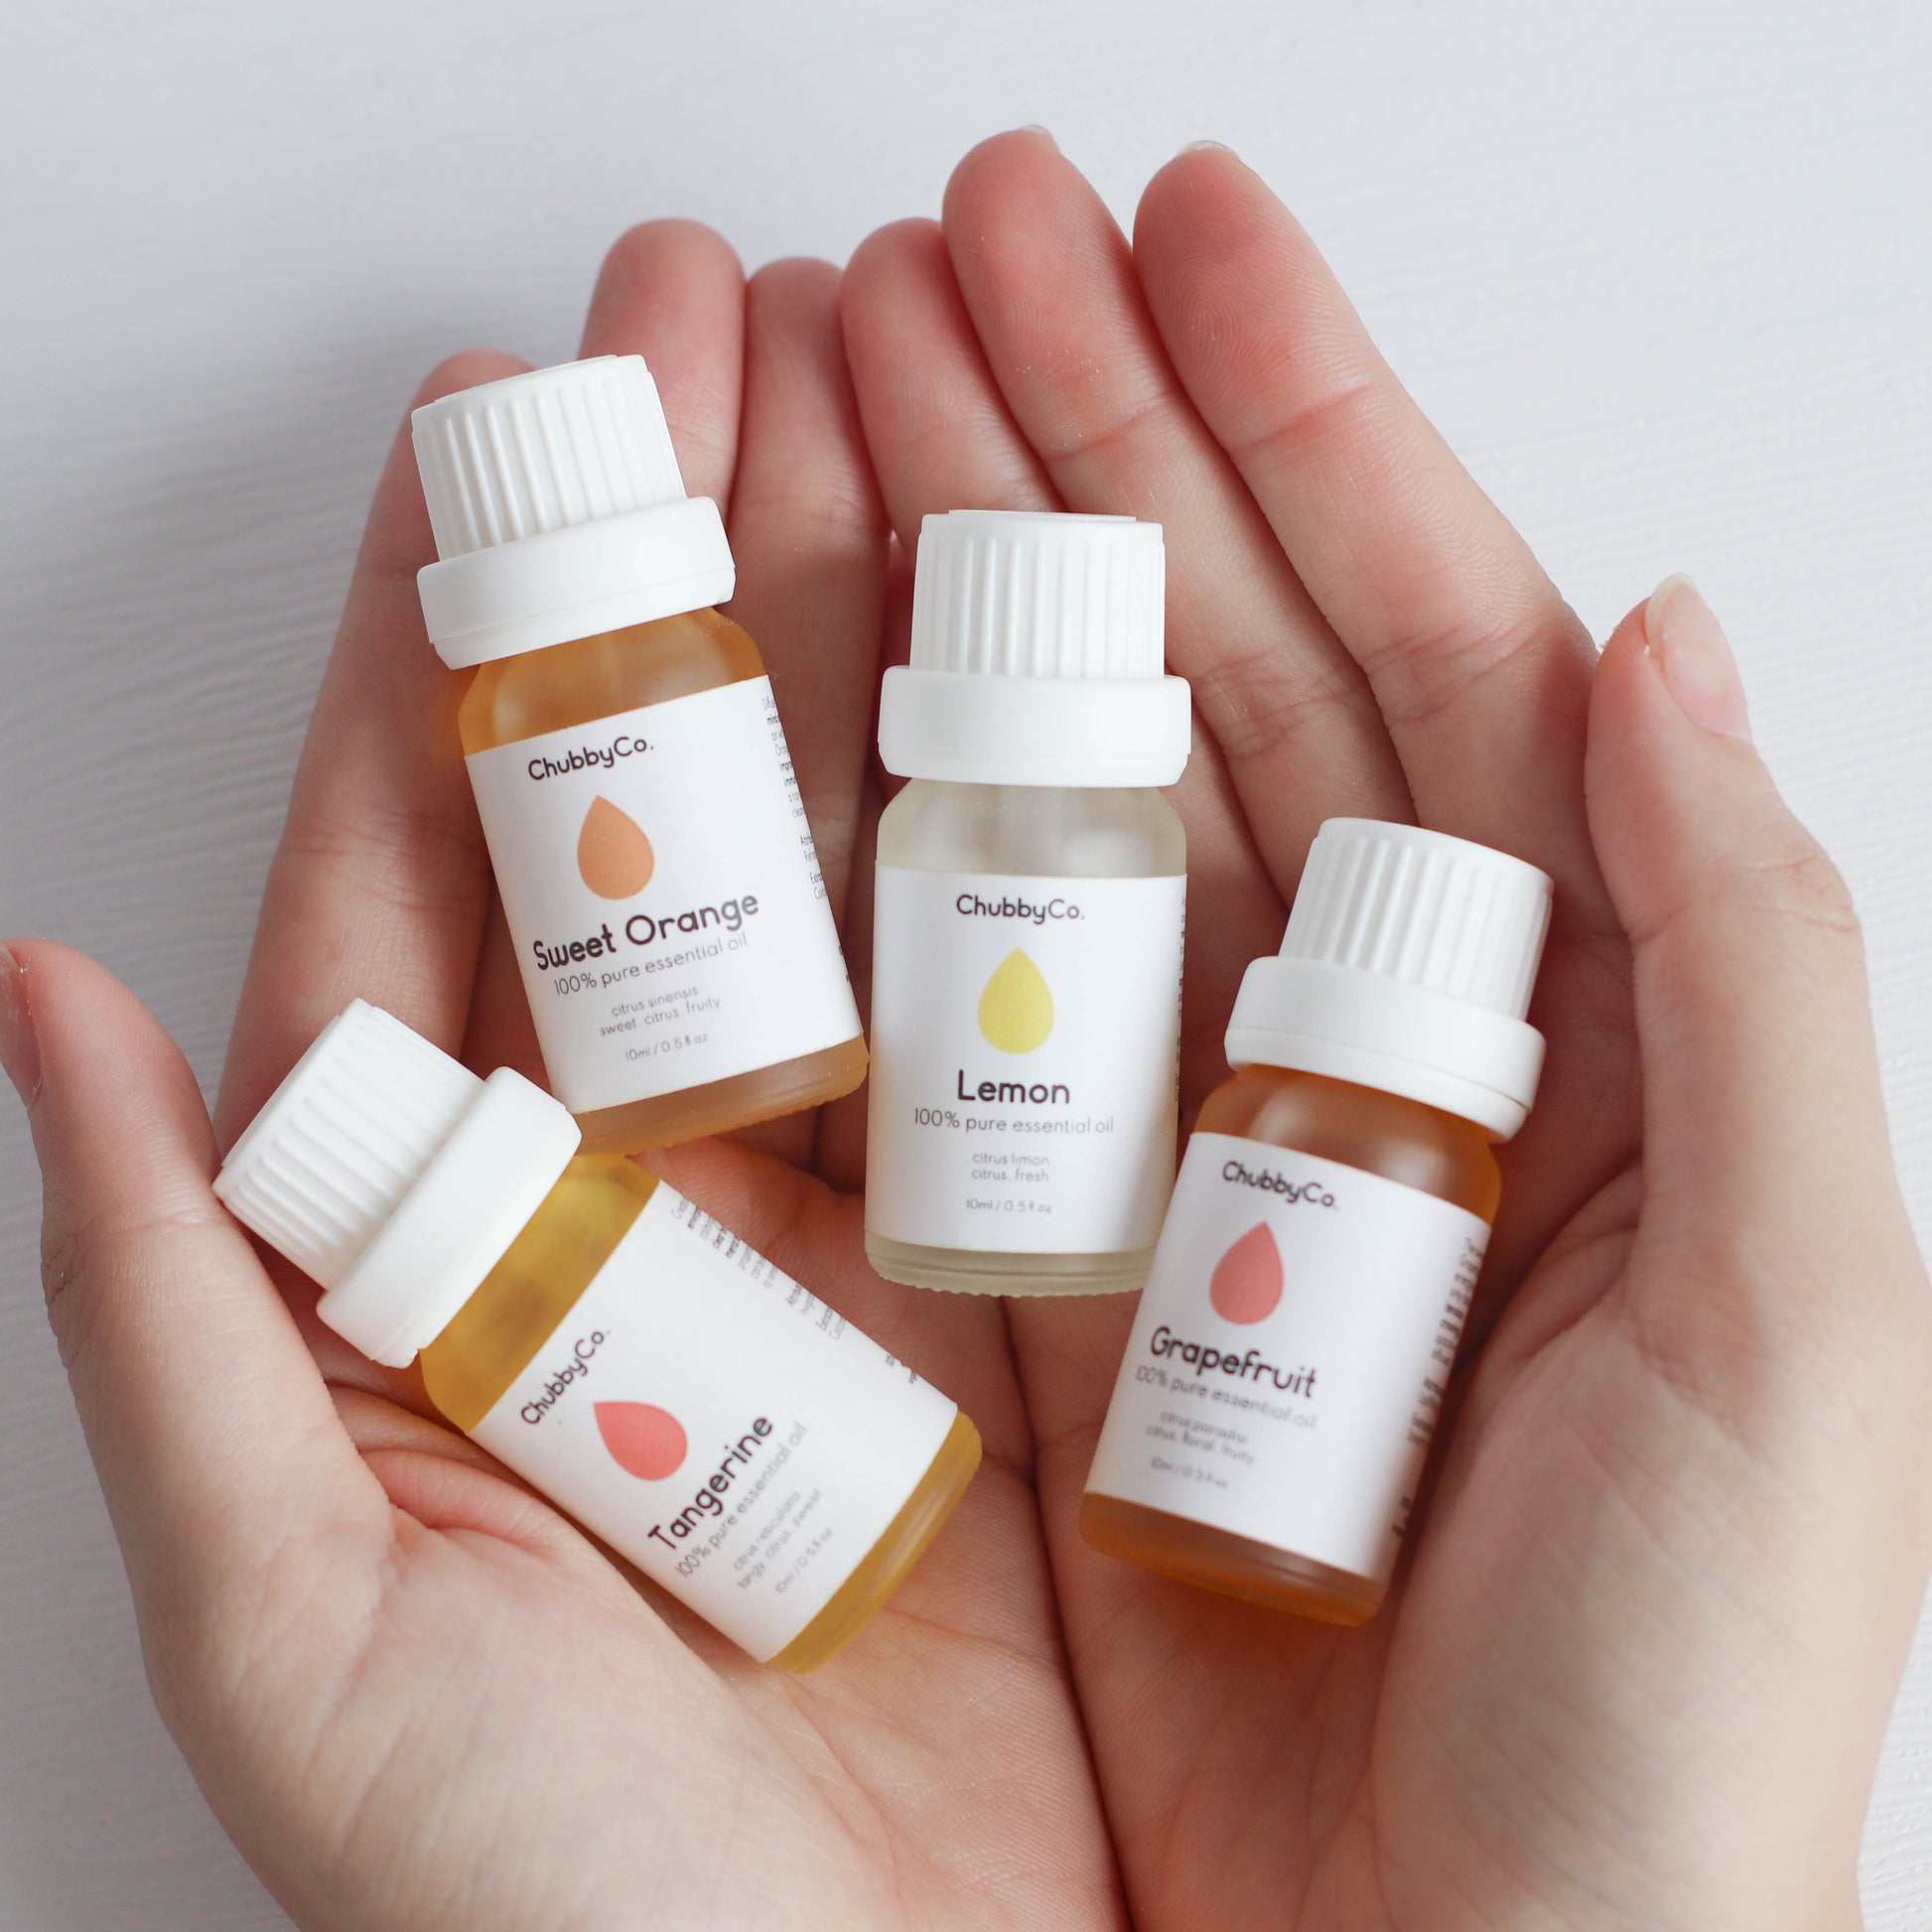 Tangerine Essential Oil - ChubbyCo. - Essential Oil Aromatherapy Singapore